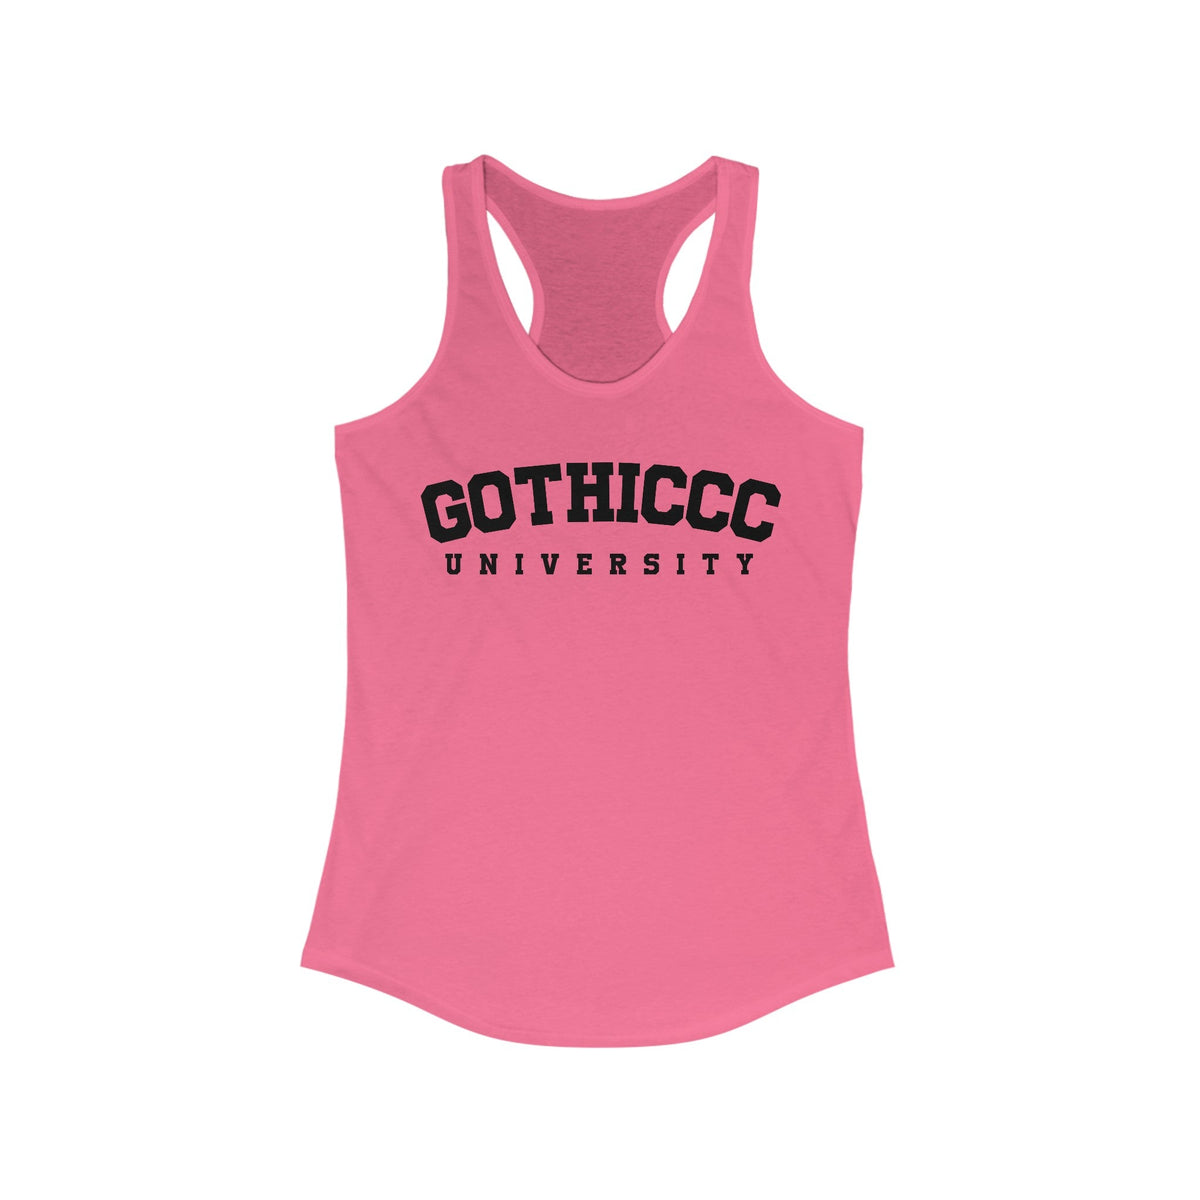 Gothiccc University Women's Racerback Tank - Goth Cloth Co.Tank Top30383720295864826920